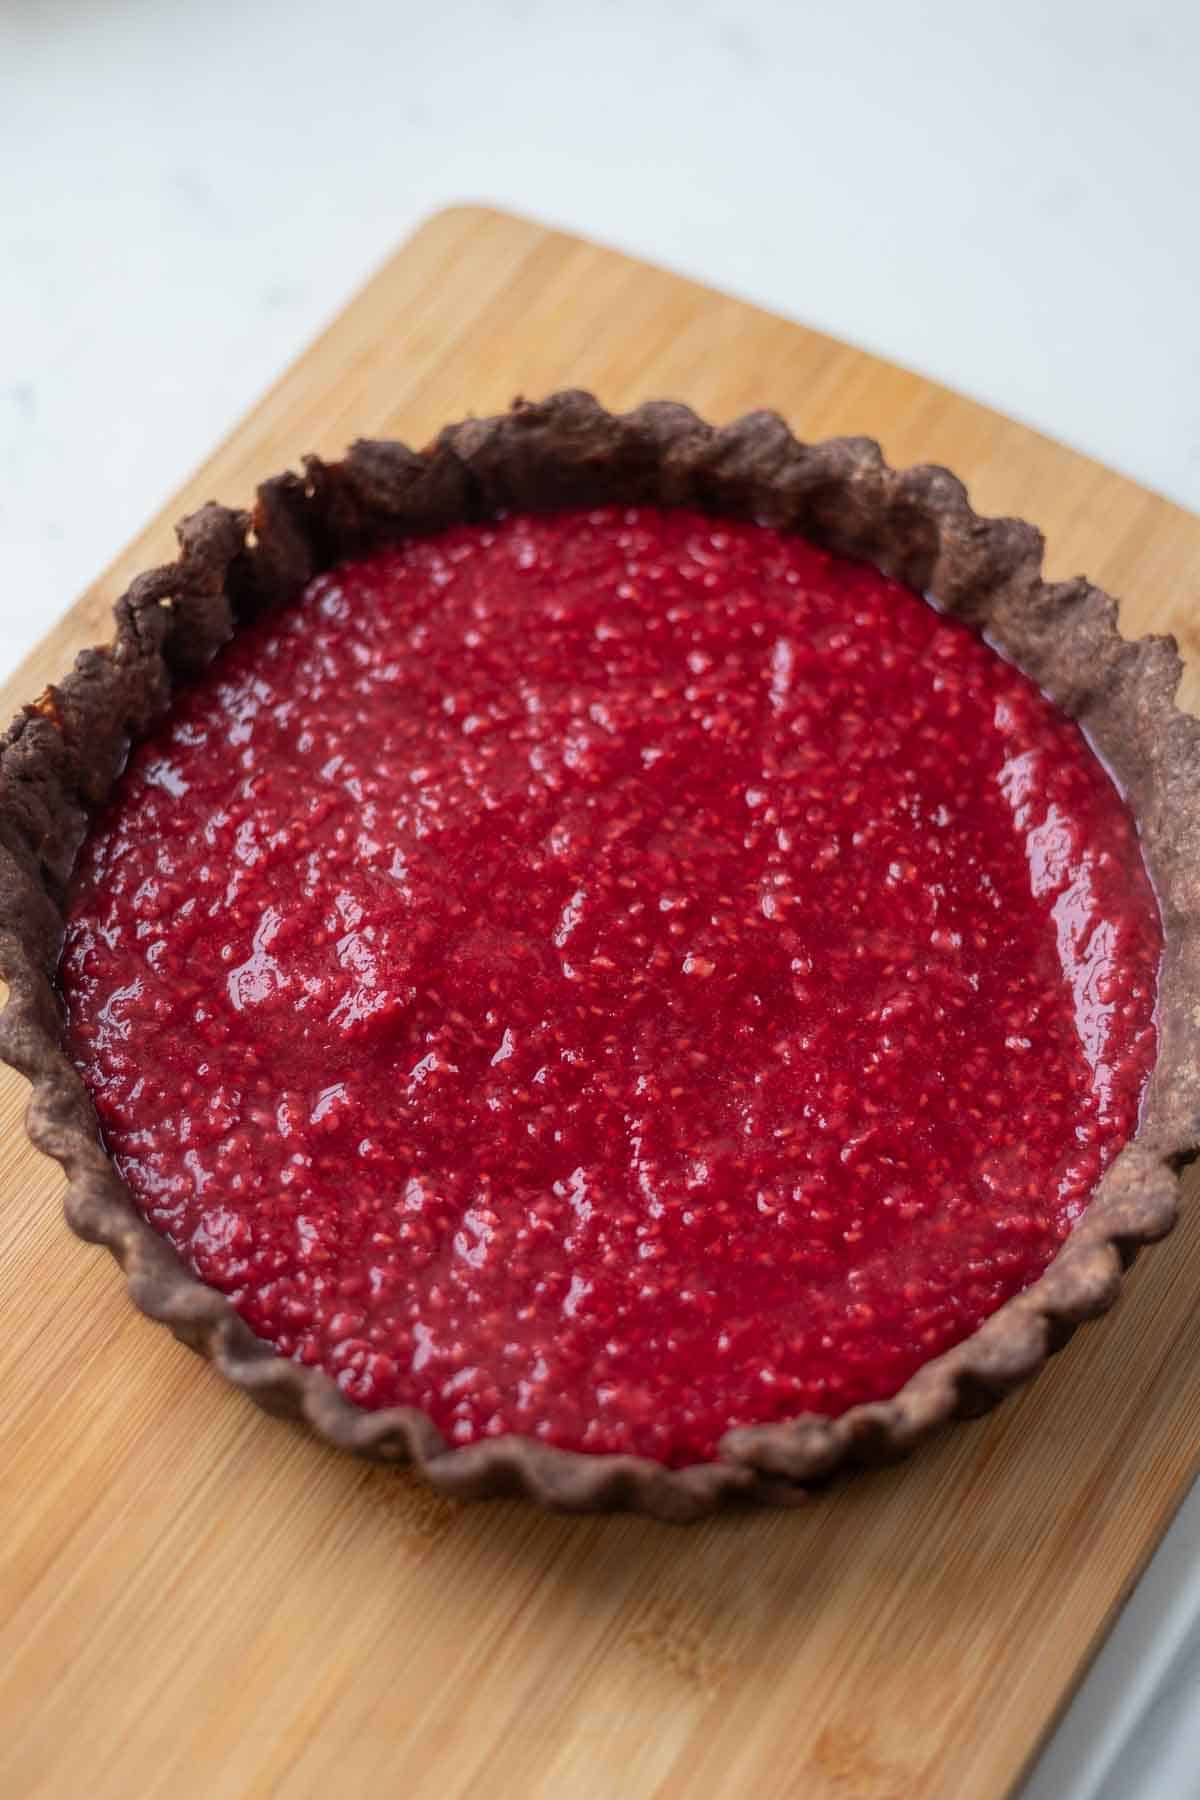 Raspberry jam in a chocolate tart crust